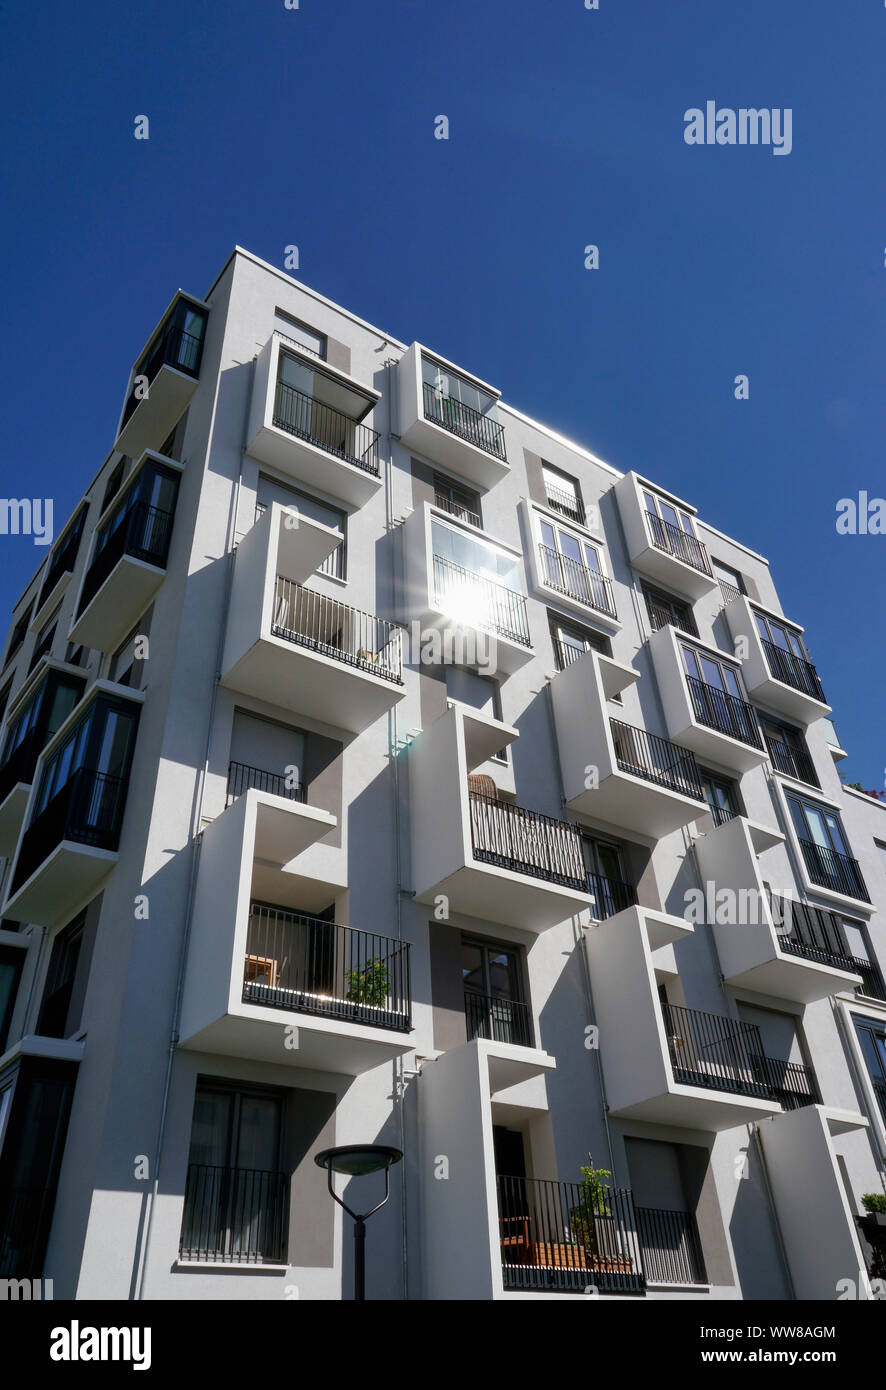 Germany, Bavaria, Munich, modern housing estate, facade, balconies, loggias, glazing Stock Photo